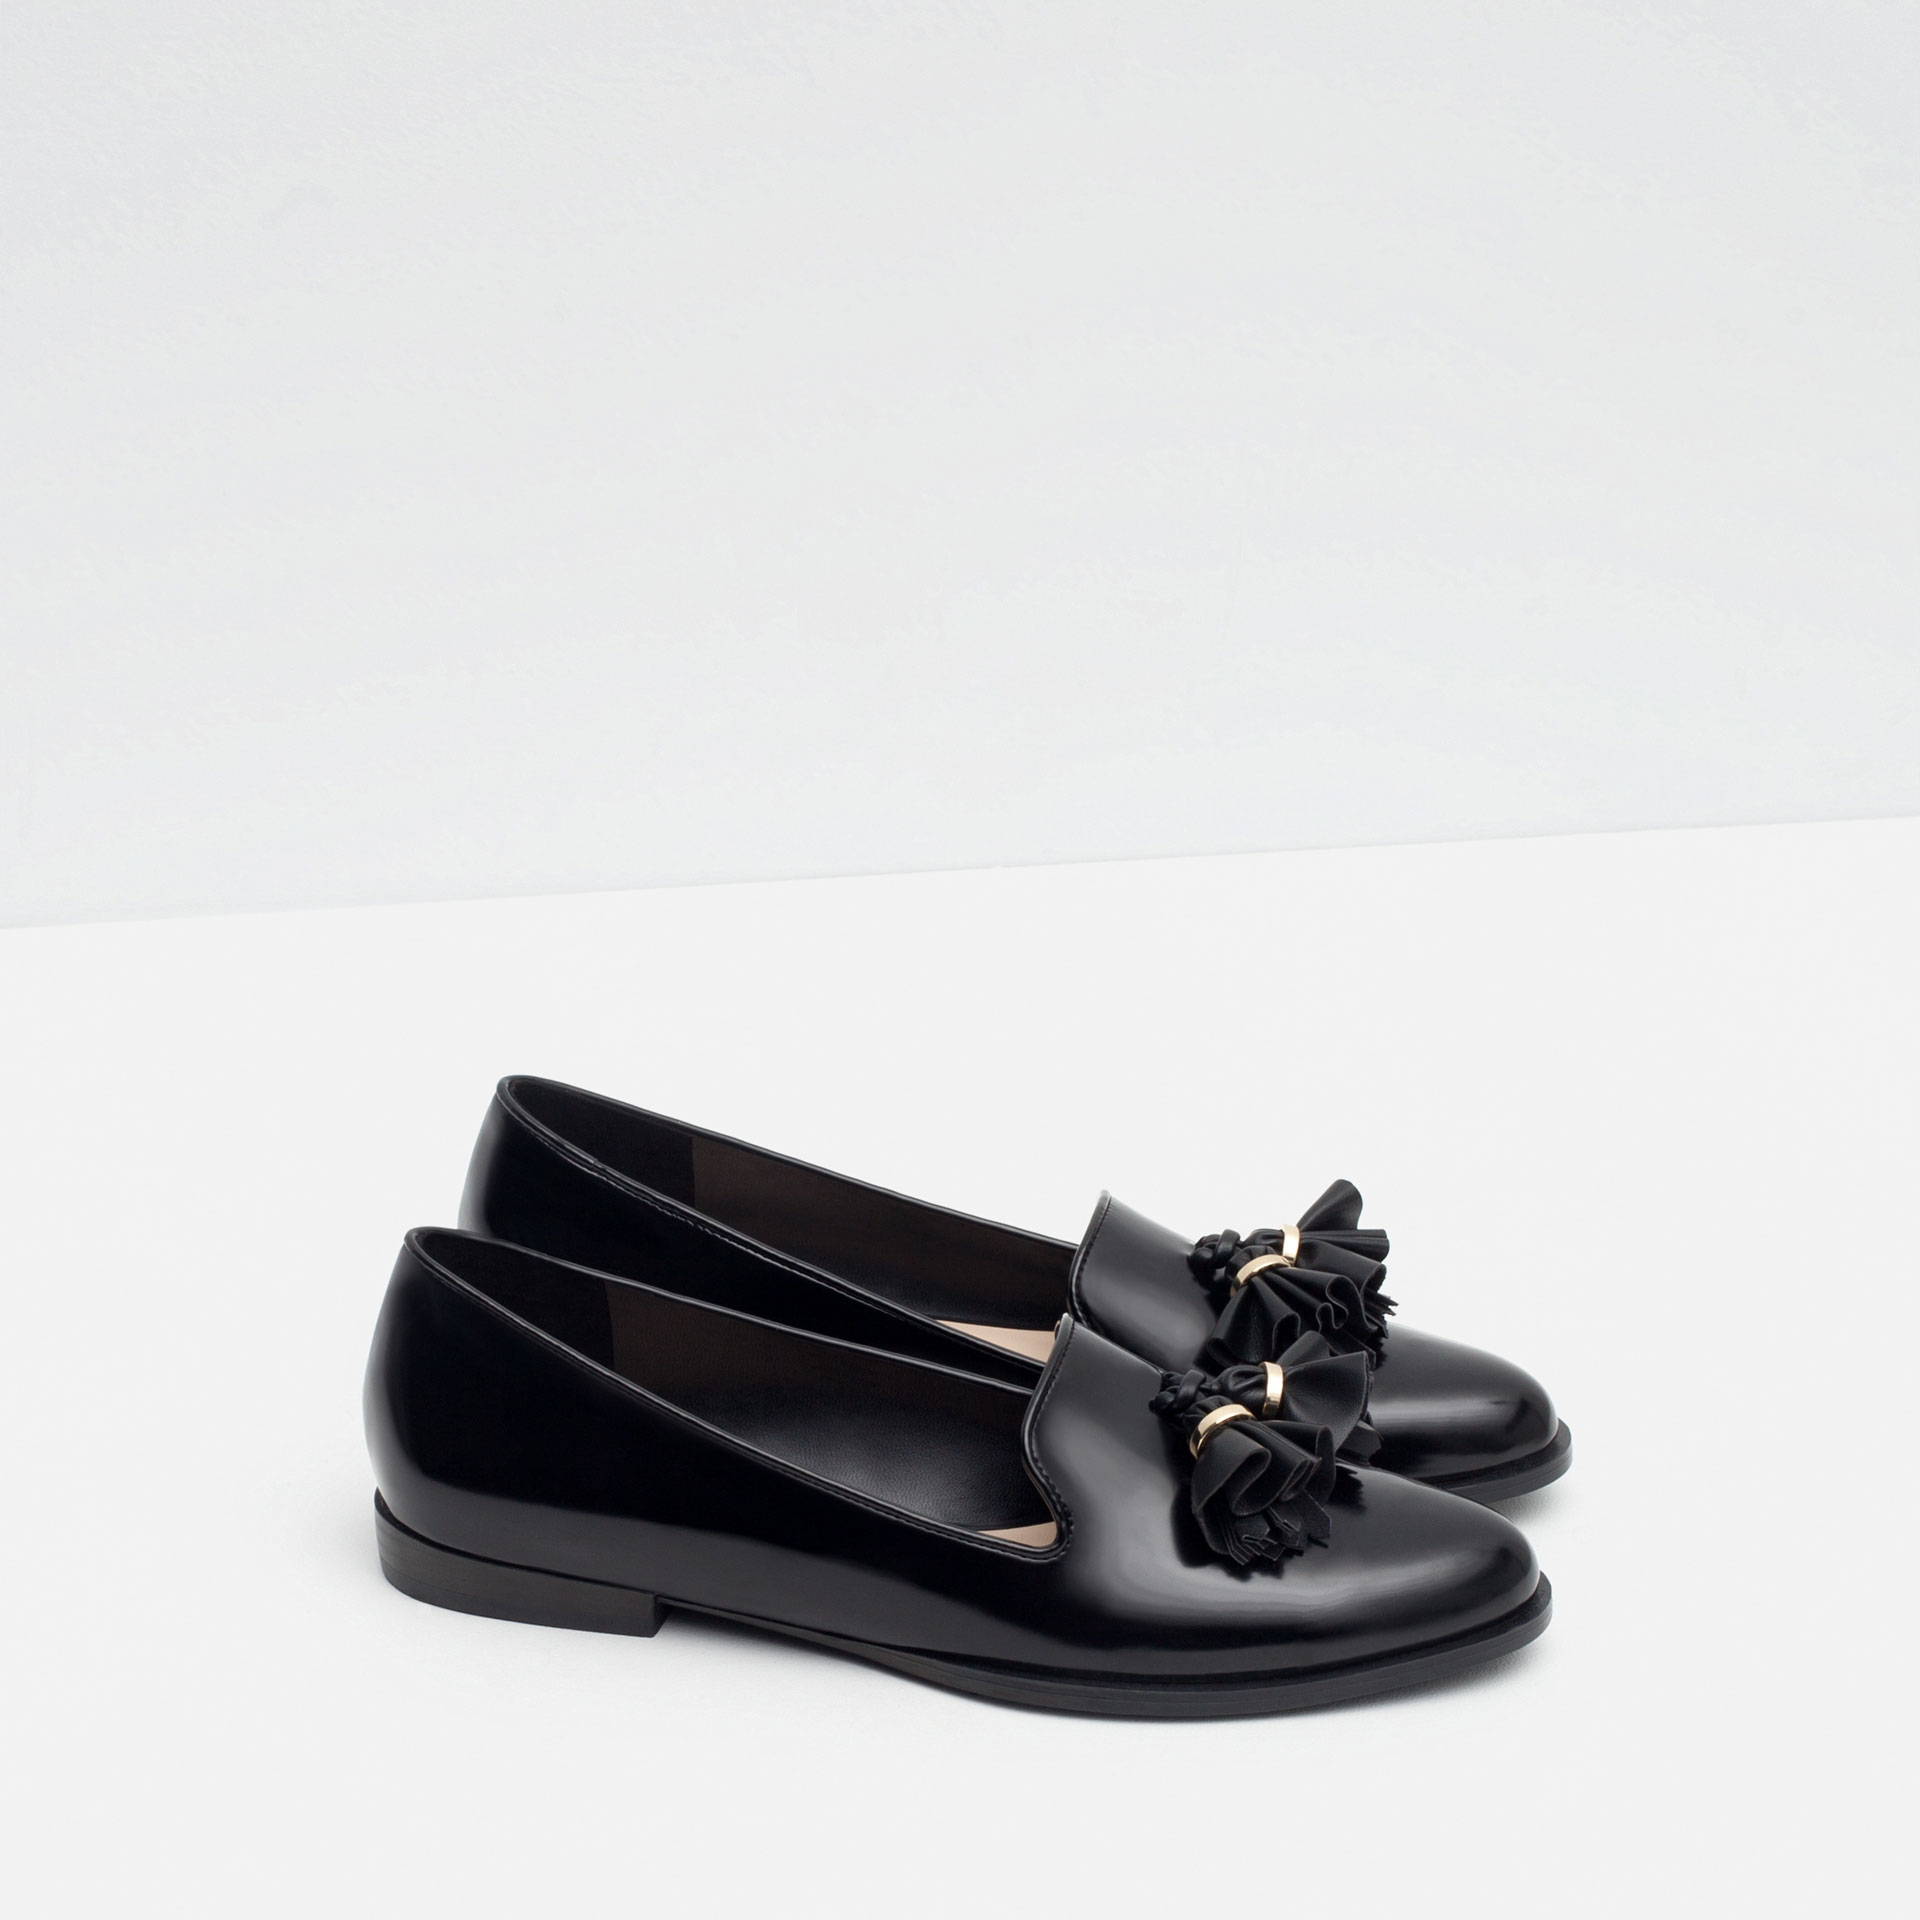 Zara Flat Shoes With Tassels in Black | Lyst